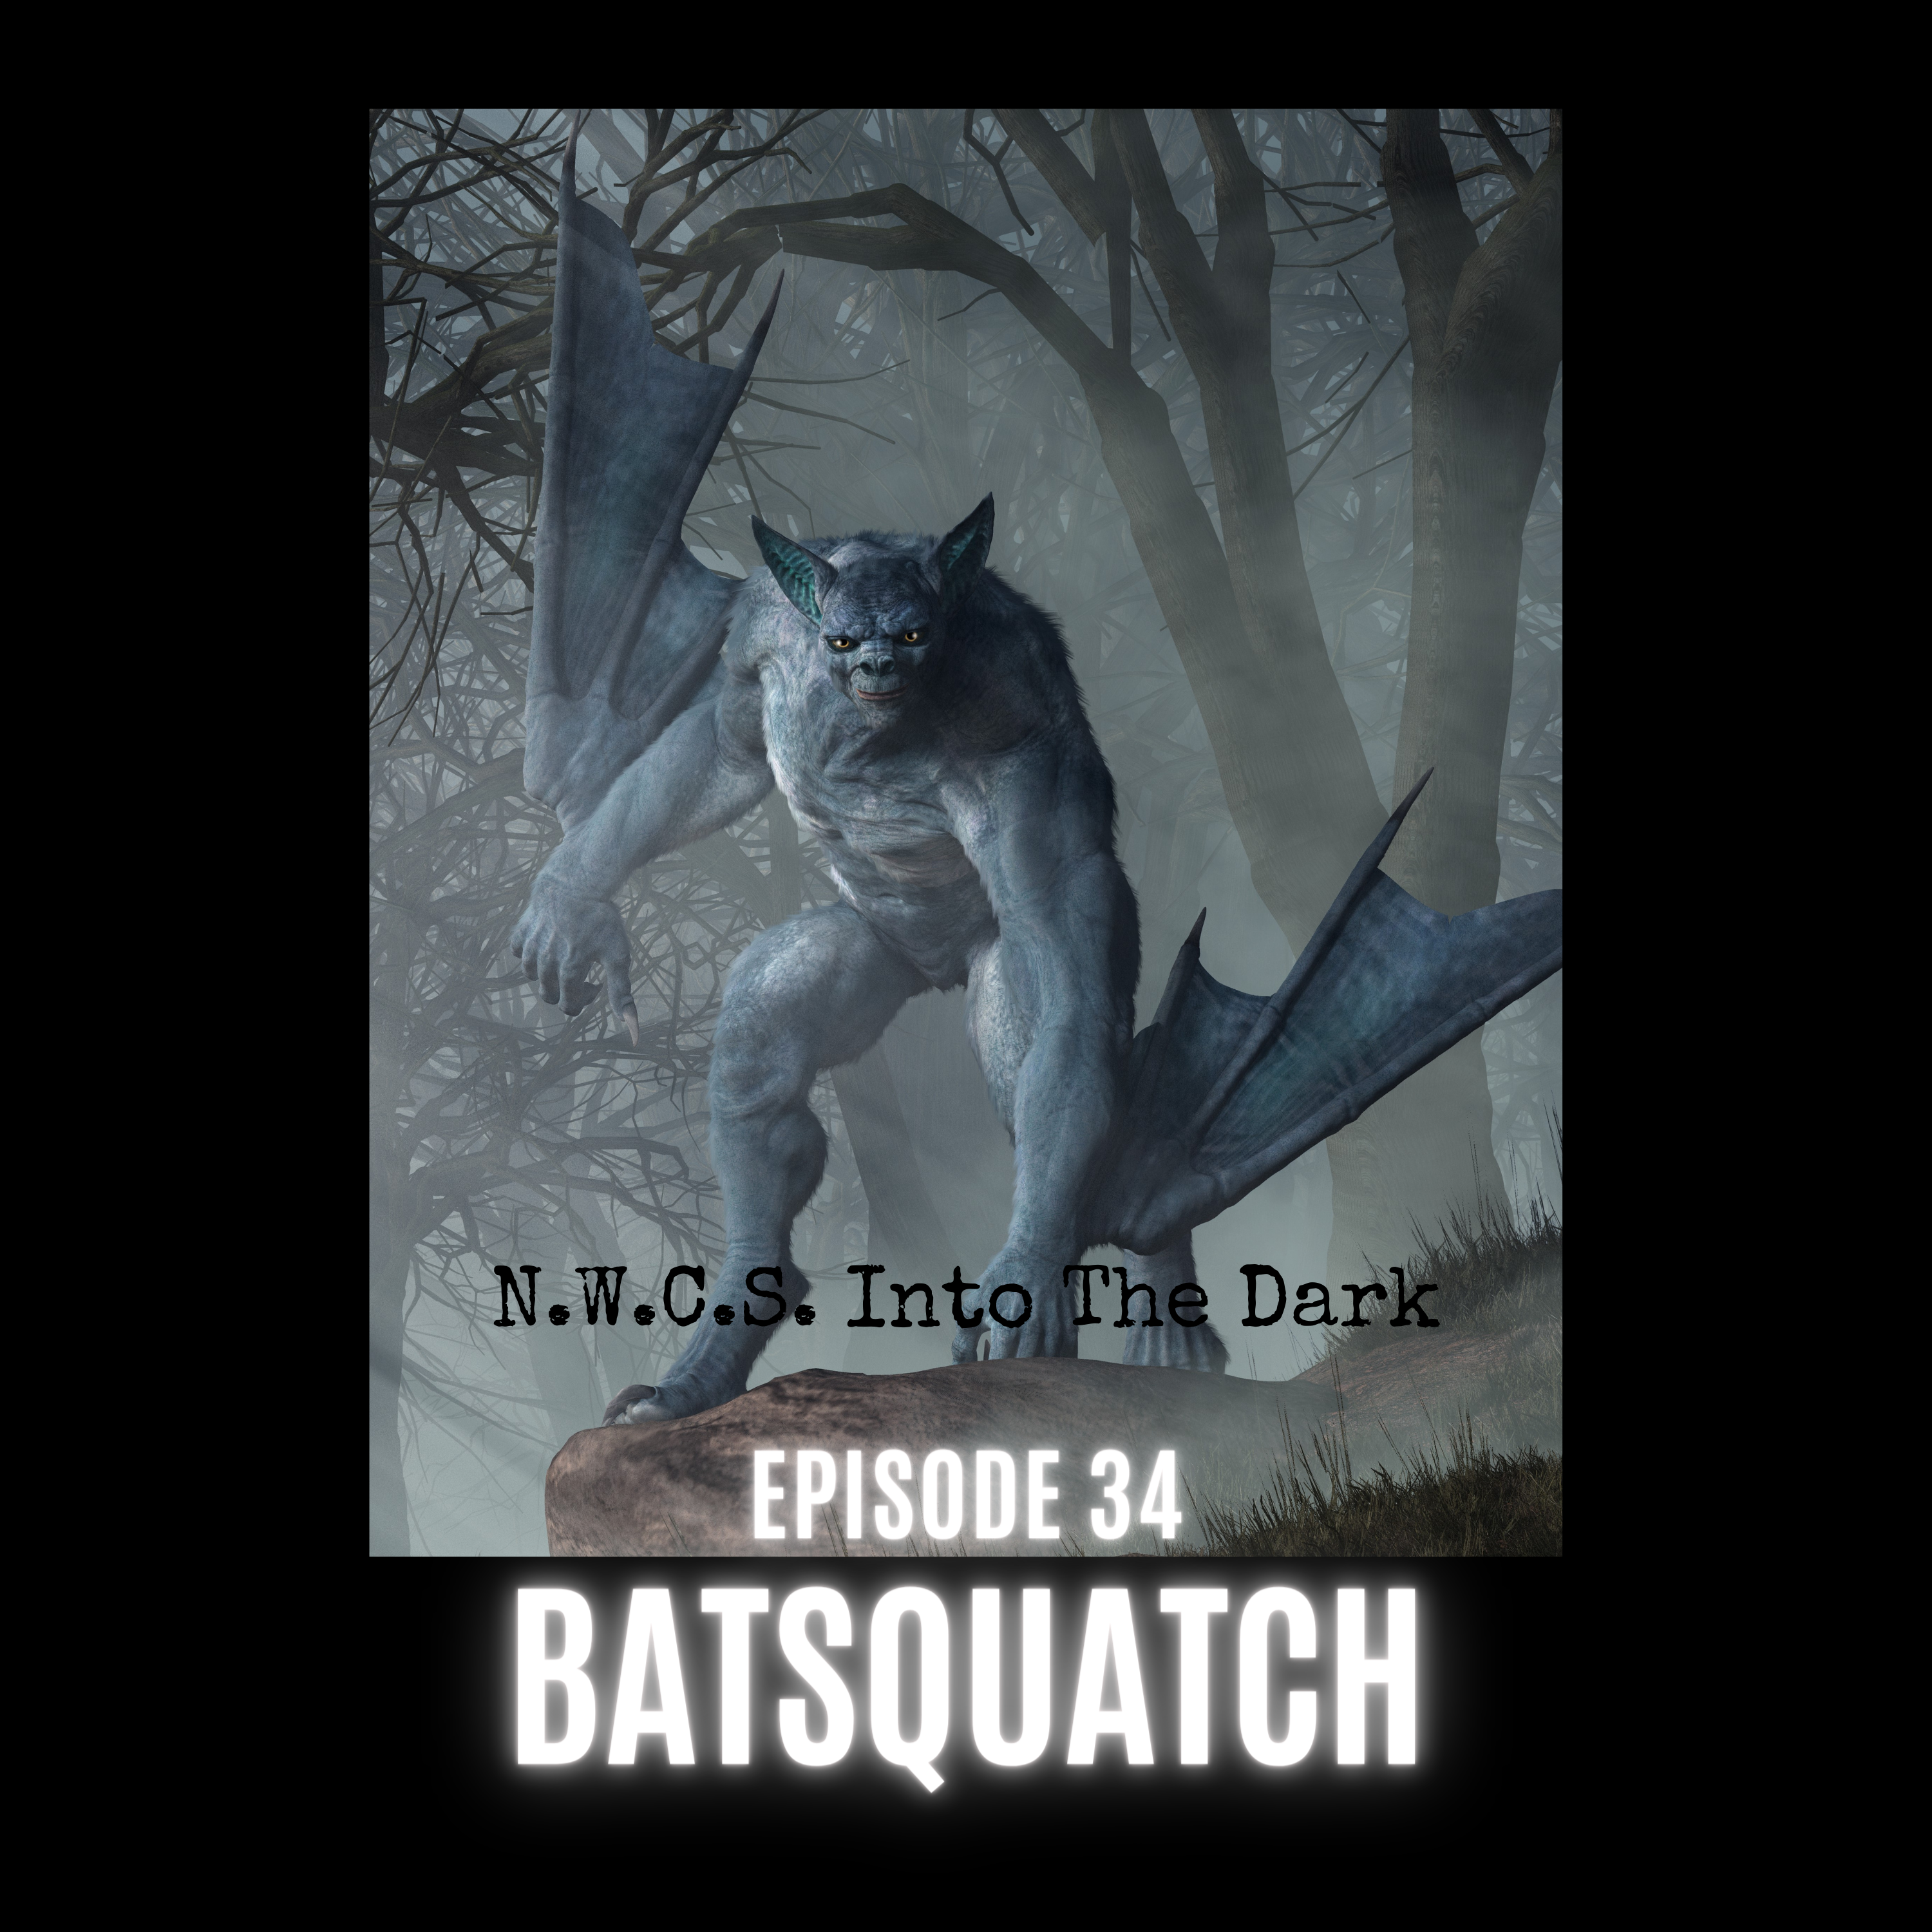 NWCS Into The Dark - Episode 34 Batsquatch